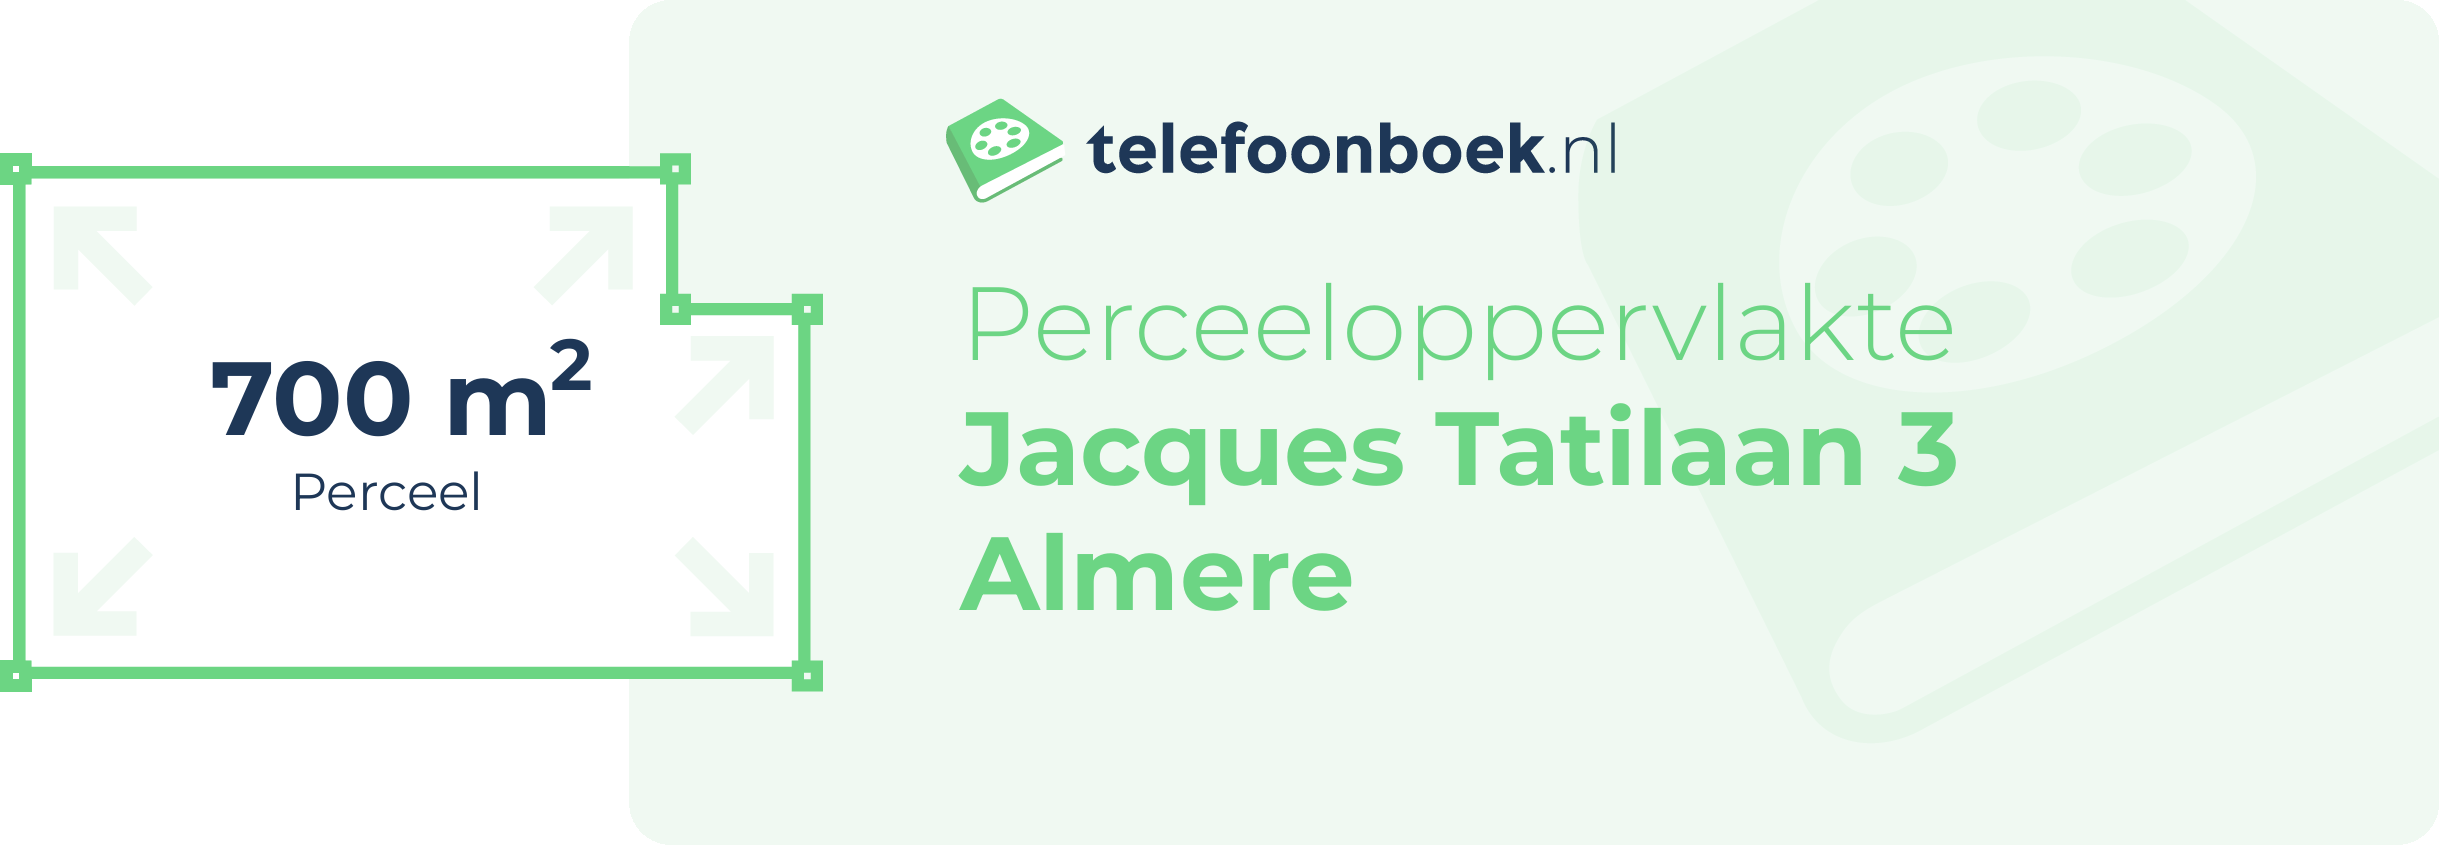 Perceeloppervlakte Jacques Tatilaan 3 Almere